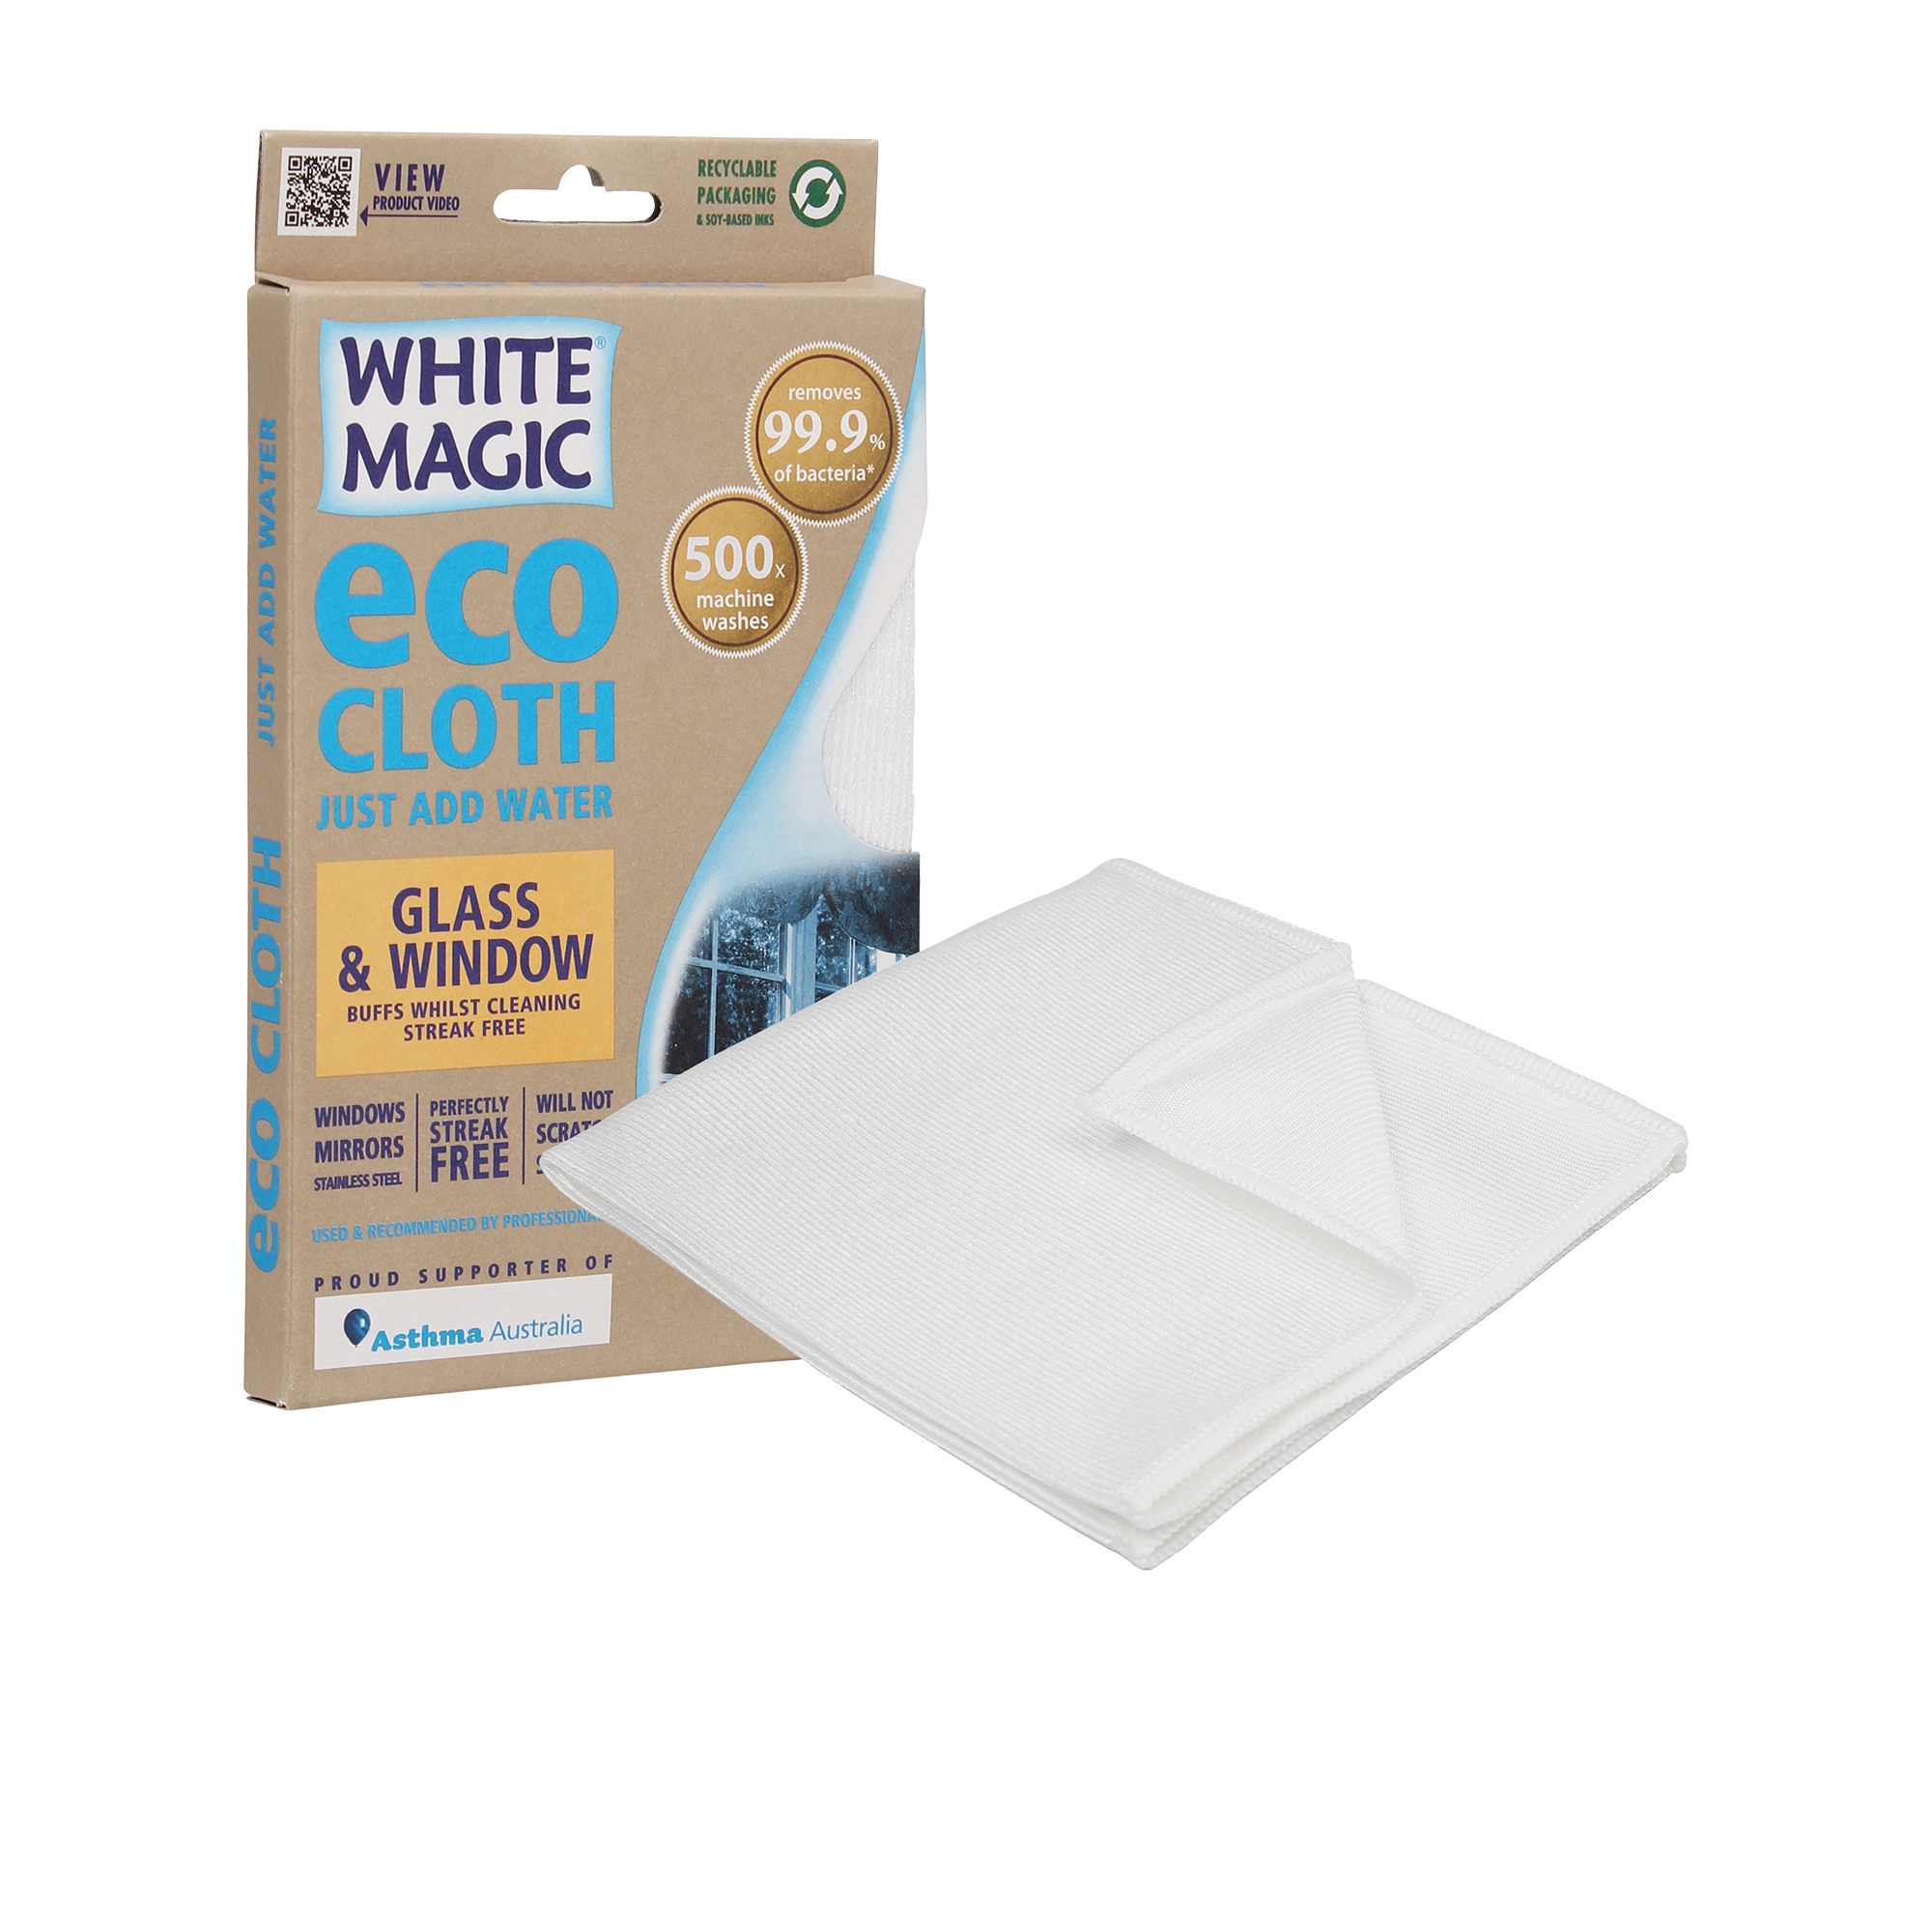 White Magic Eco Cloth Glass & Window Image 1